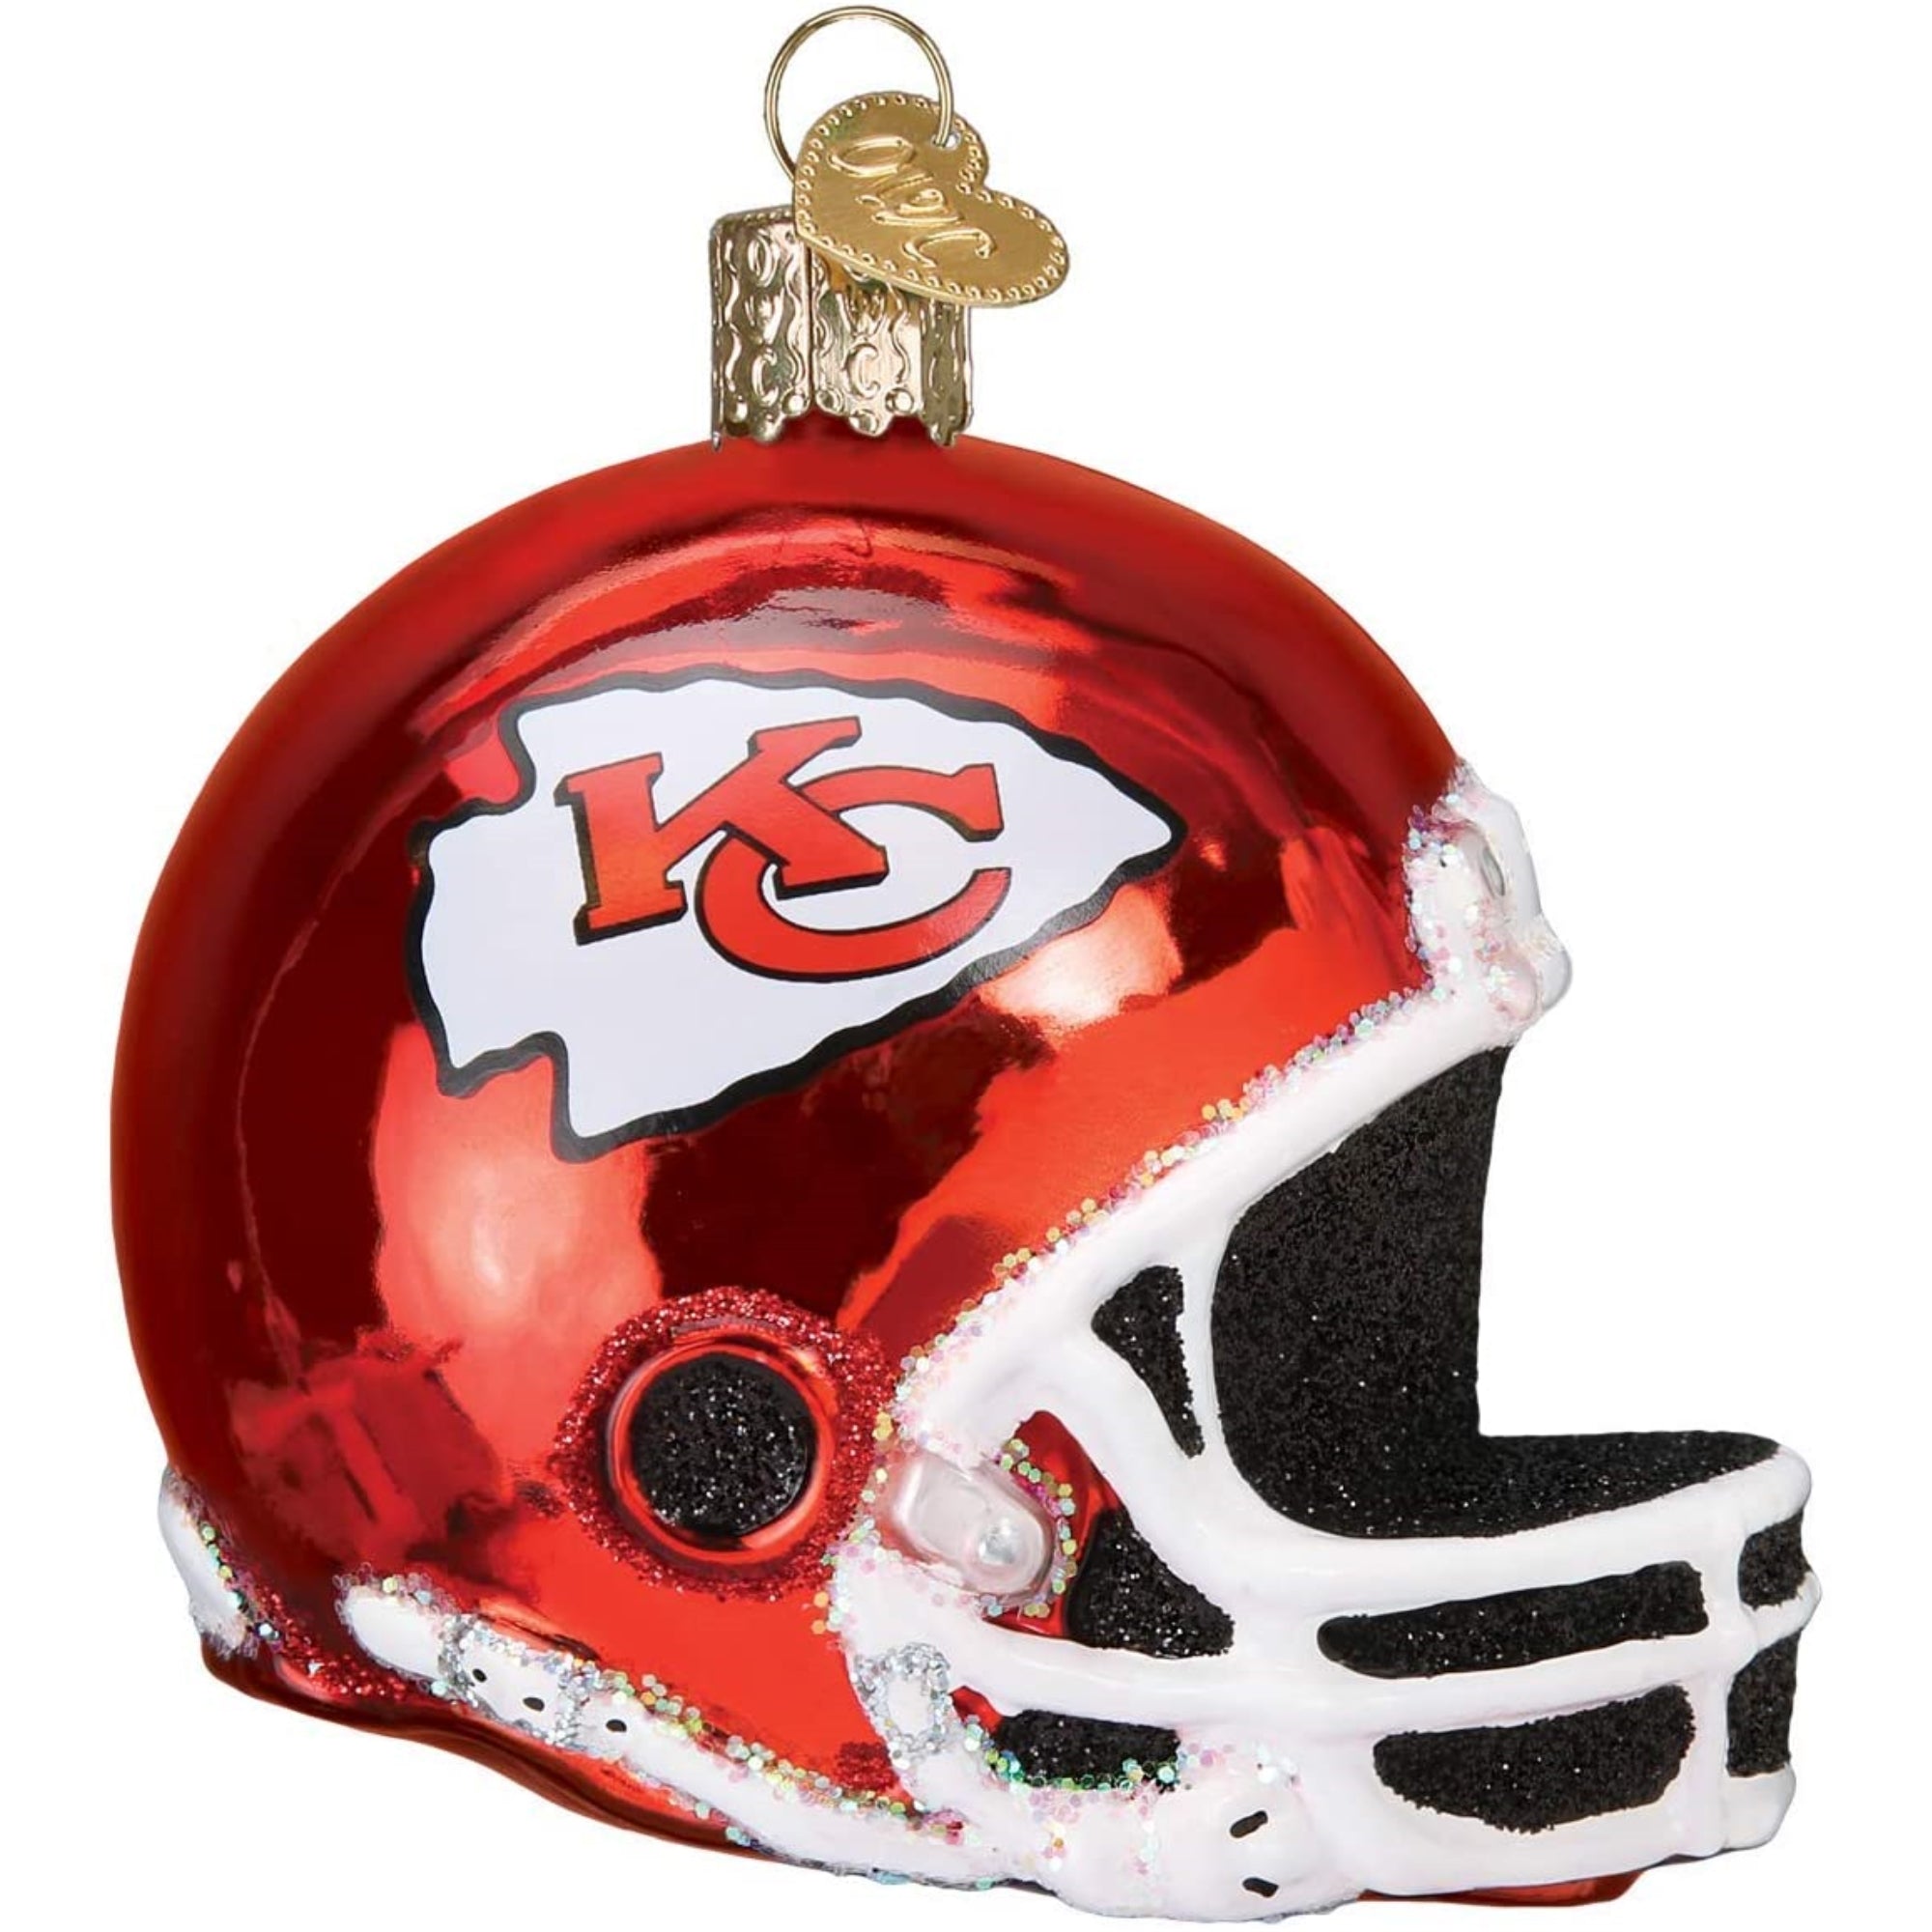 Old World Christmas Kansas City Chiefs Helmet Ornament For Christmas Tree